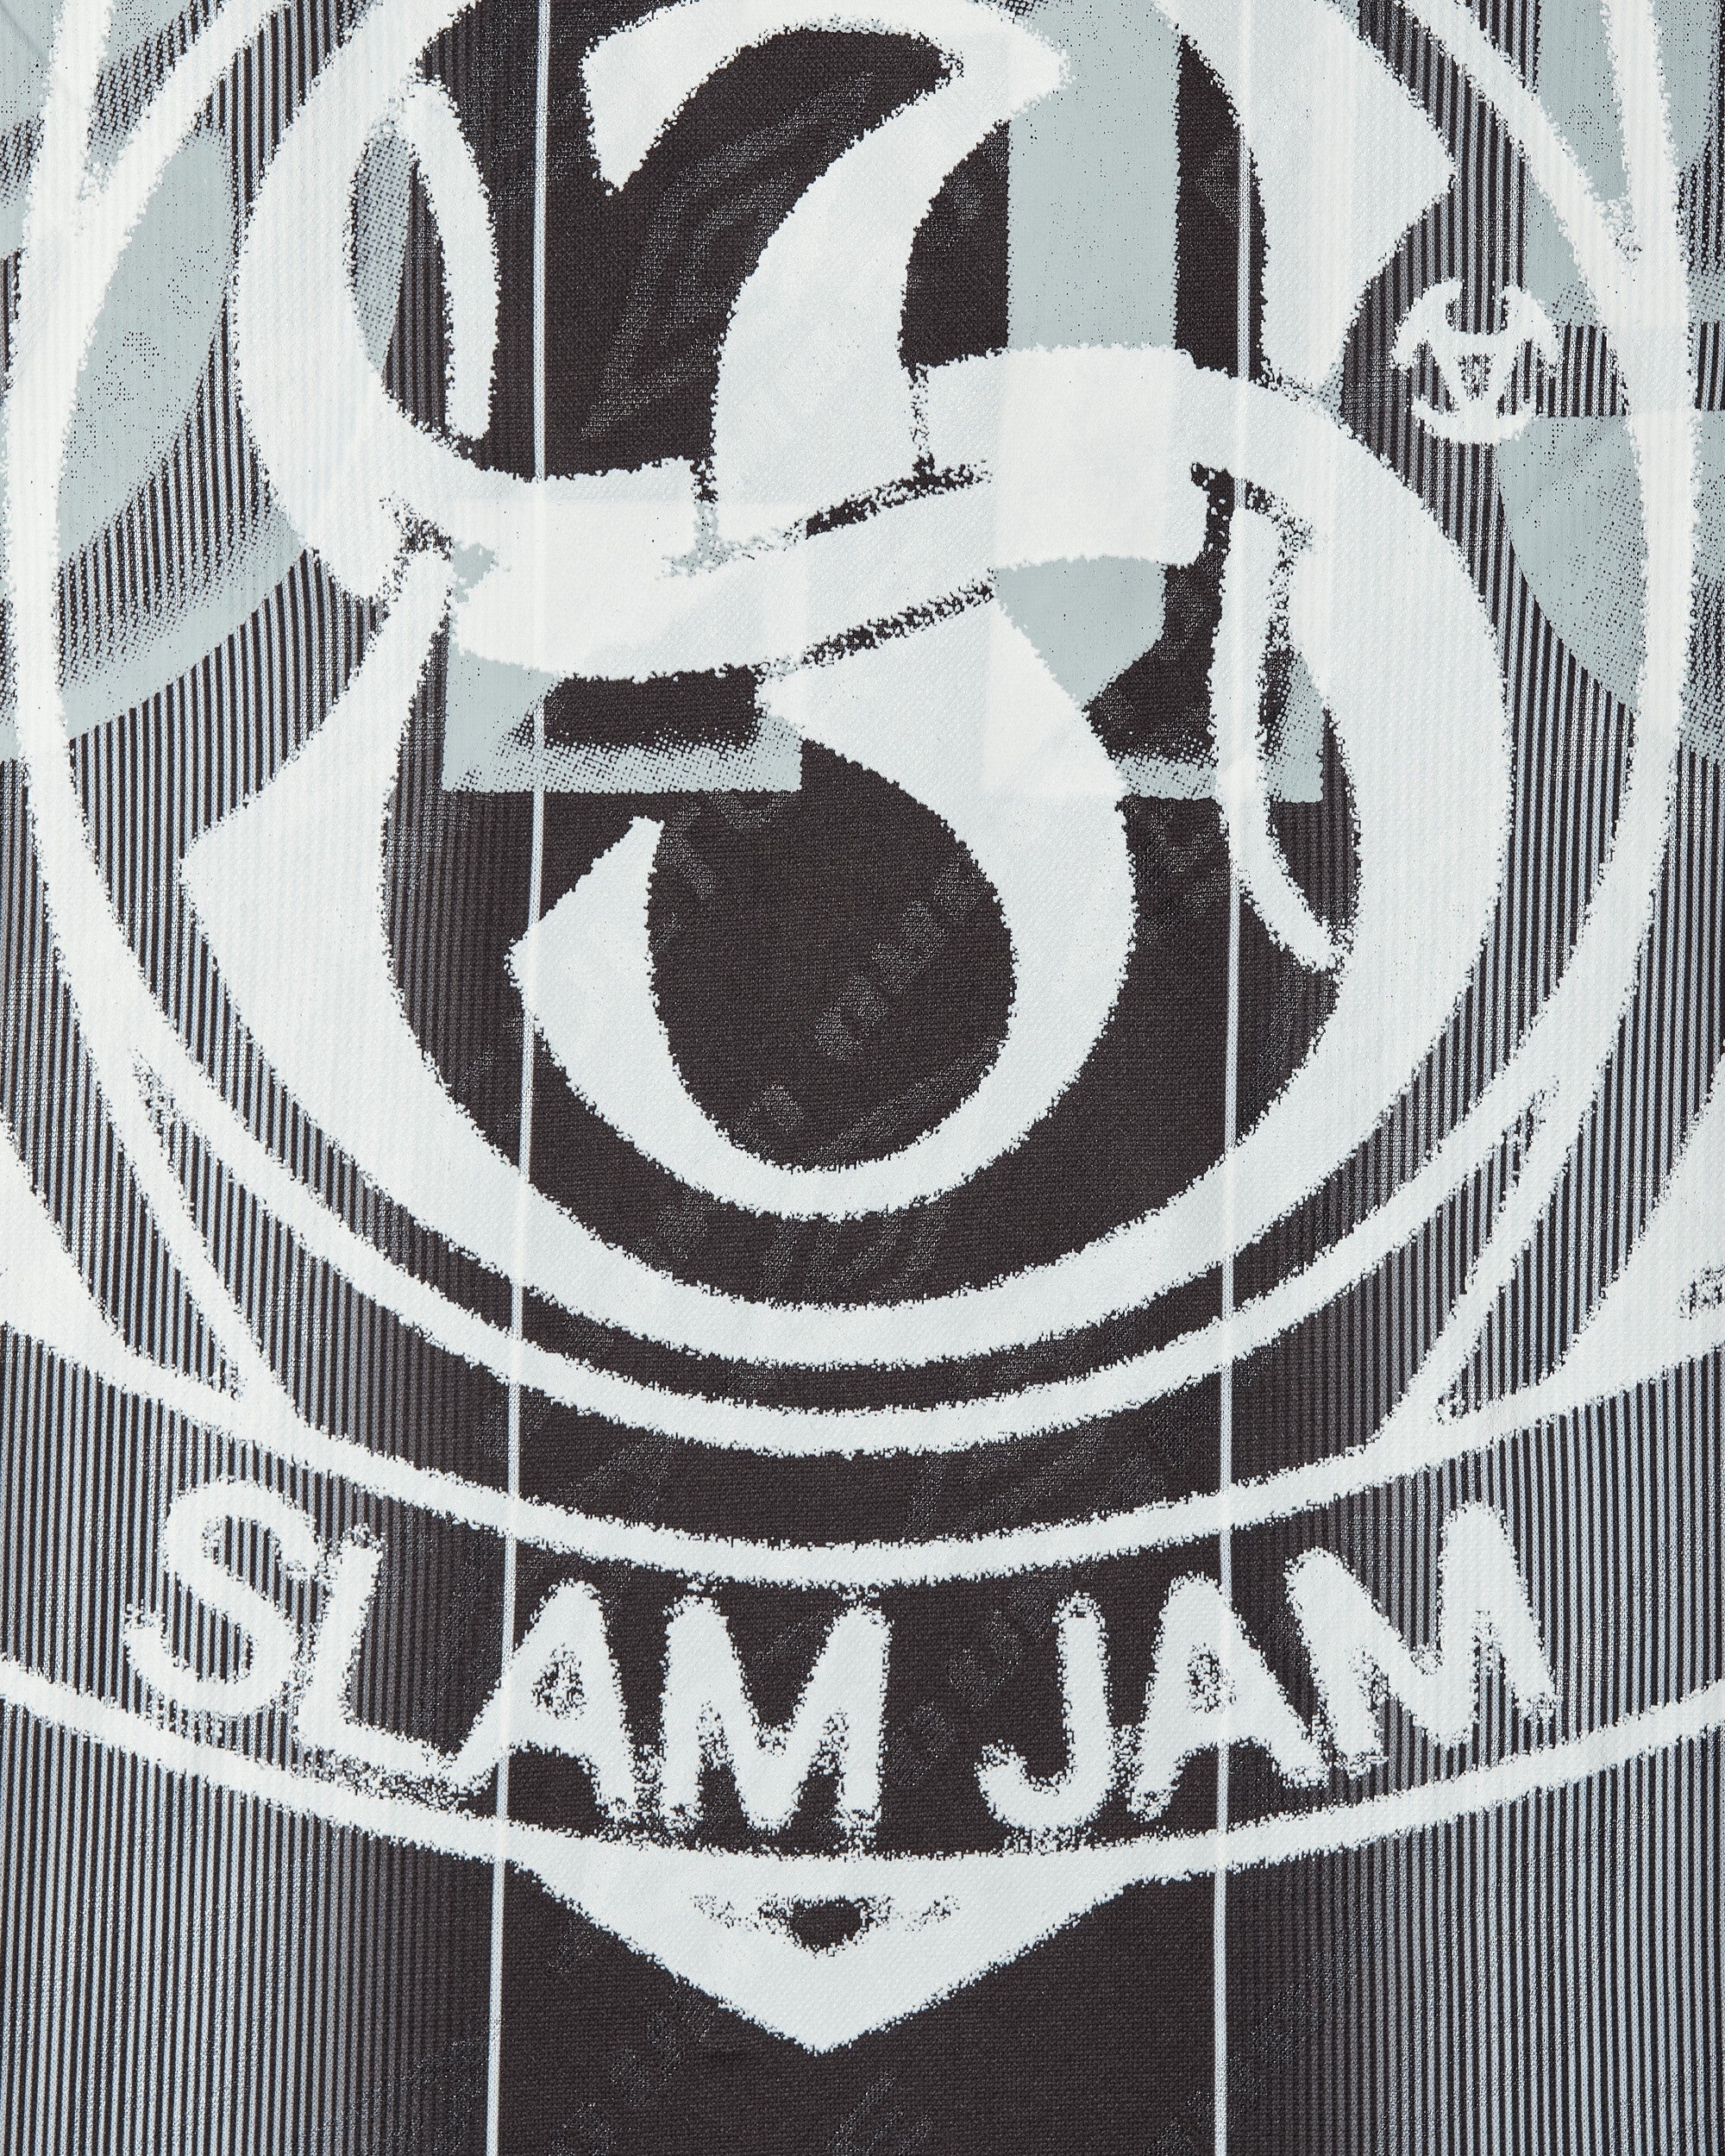 Slam Jam T-Shirt Soccer V Neck X Slam jam Black T-Shirts Shortsleeve Shirt UBMW004JY04NEW BLK0001